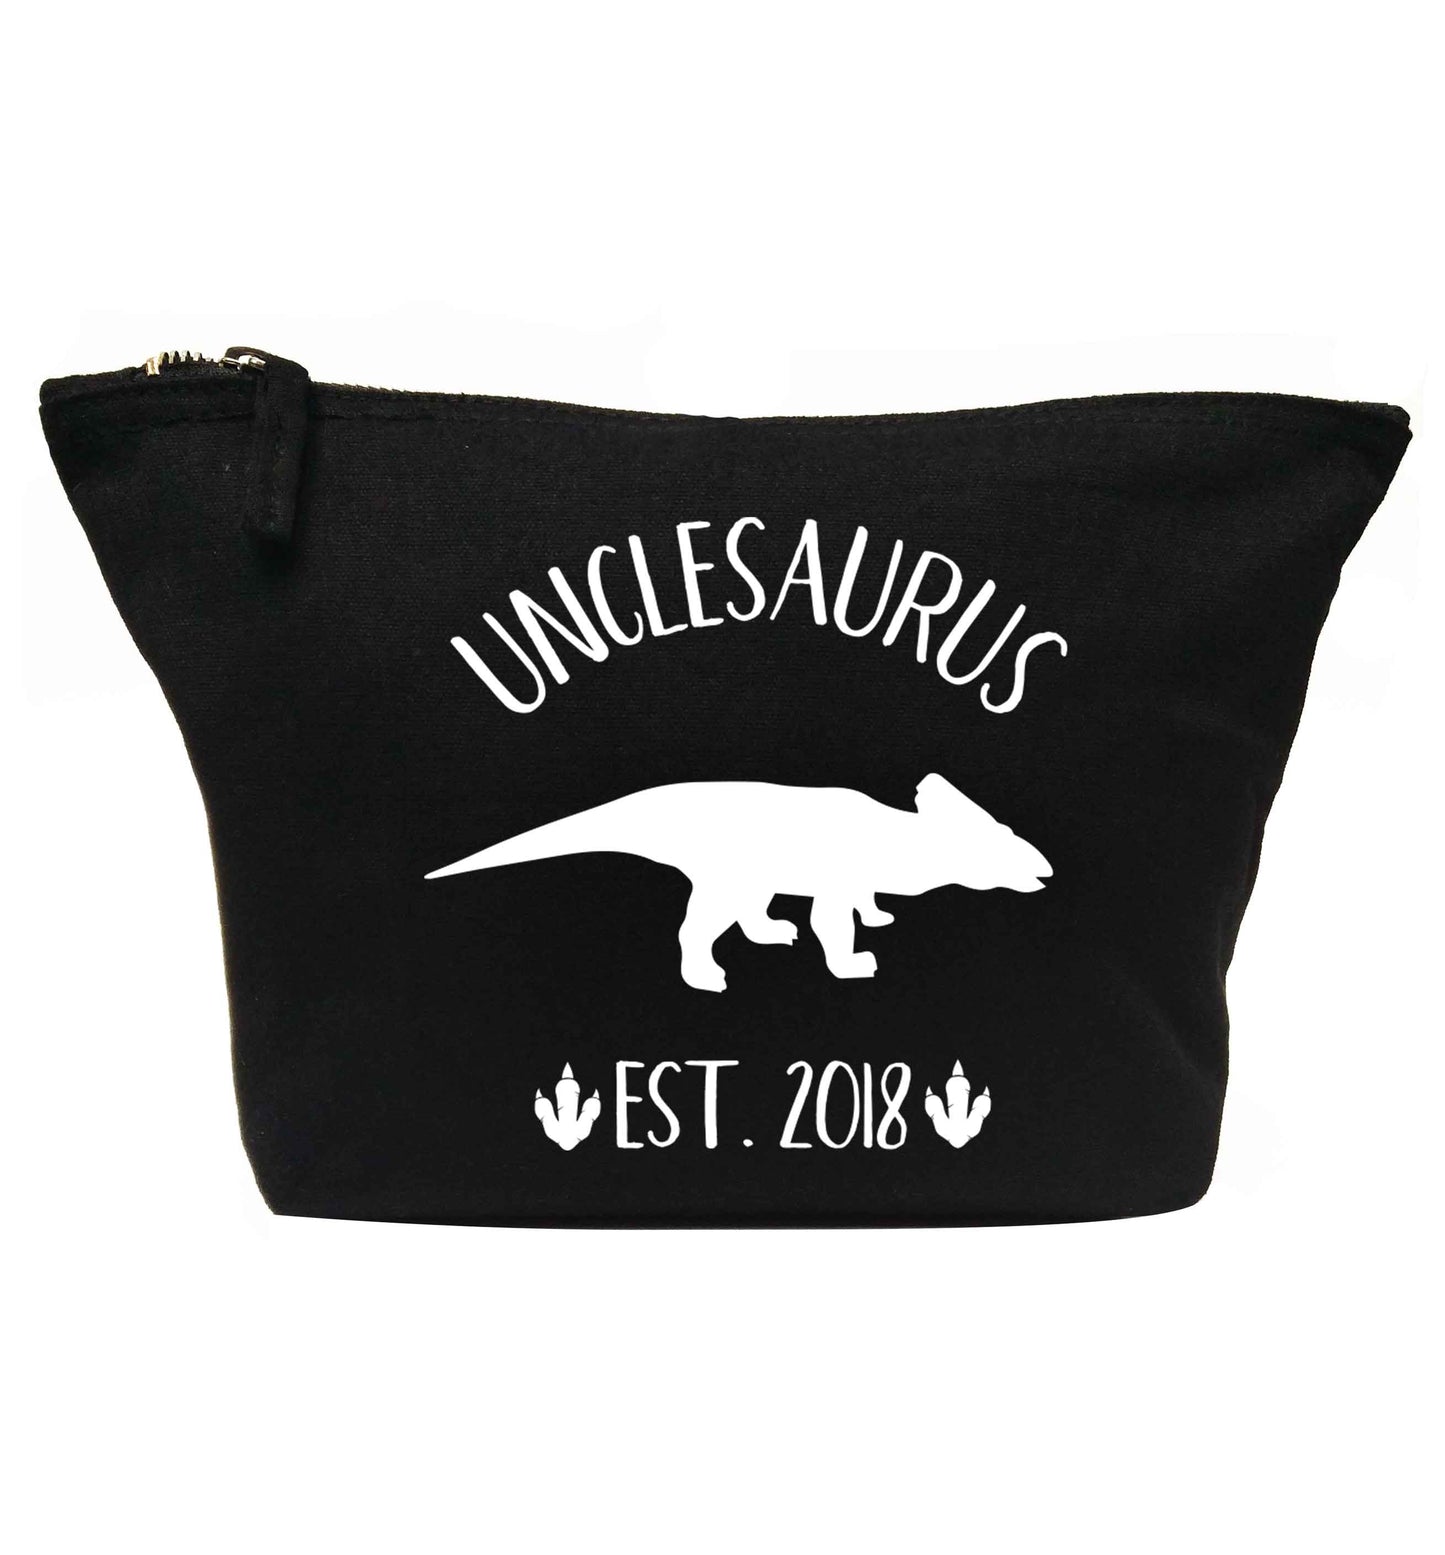 Personalised unclesaurus since (custom date) | makeup / wash bag